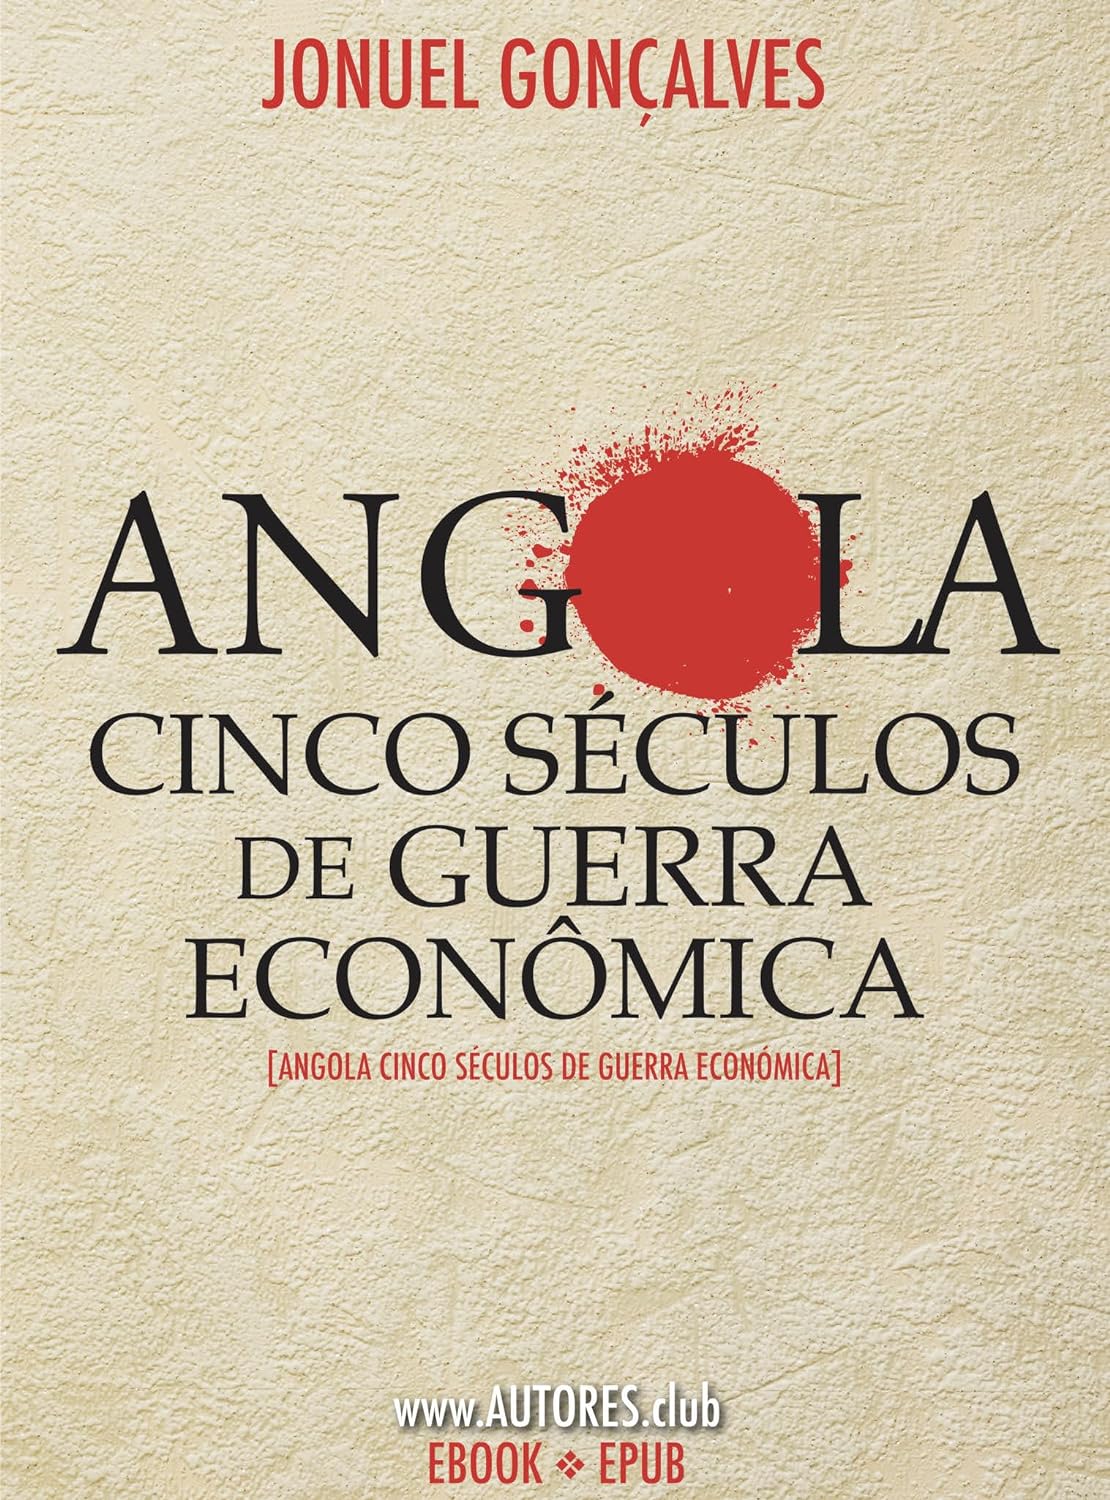 Kindle Edition: “Angola Cinco Séculos de Guerra Econômica” de Jonuel Gonçalves